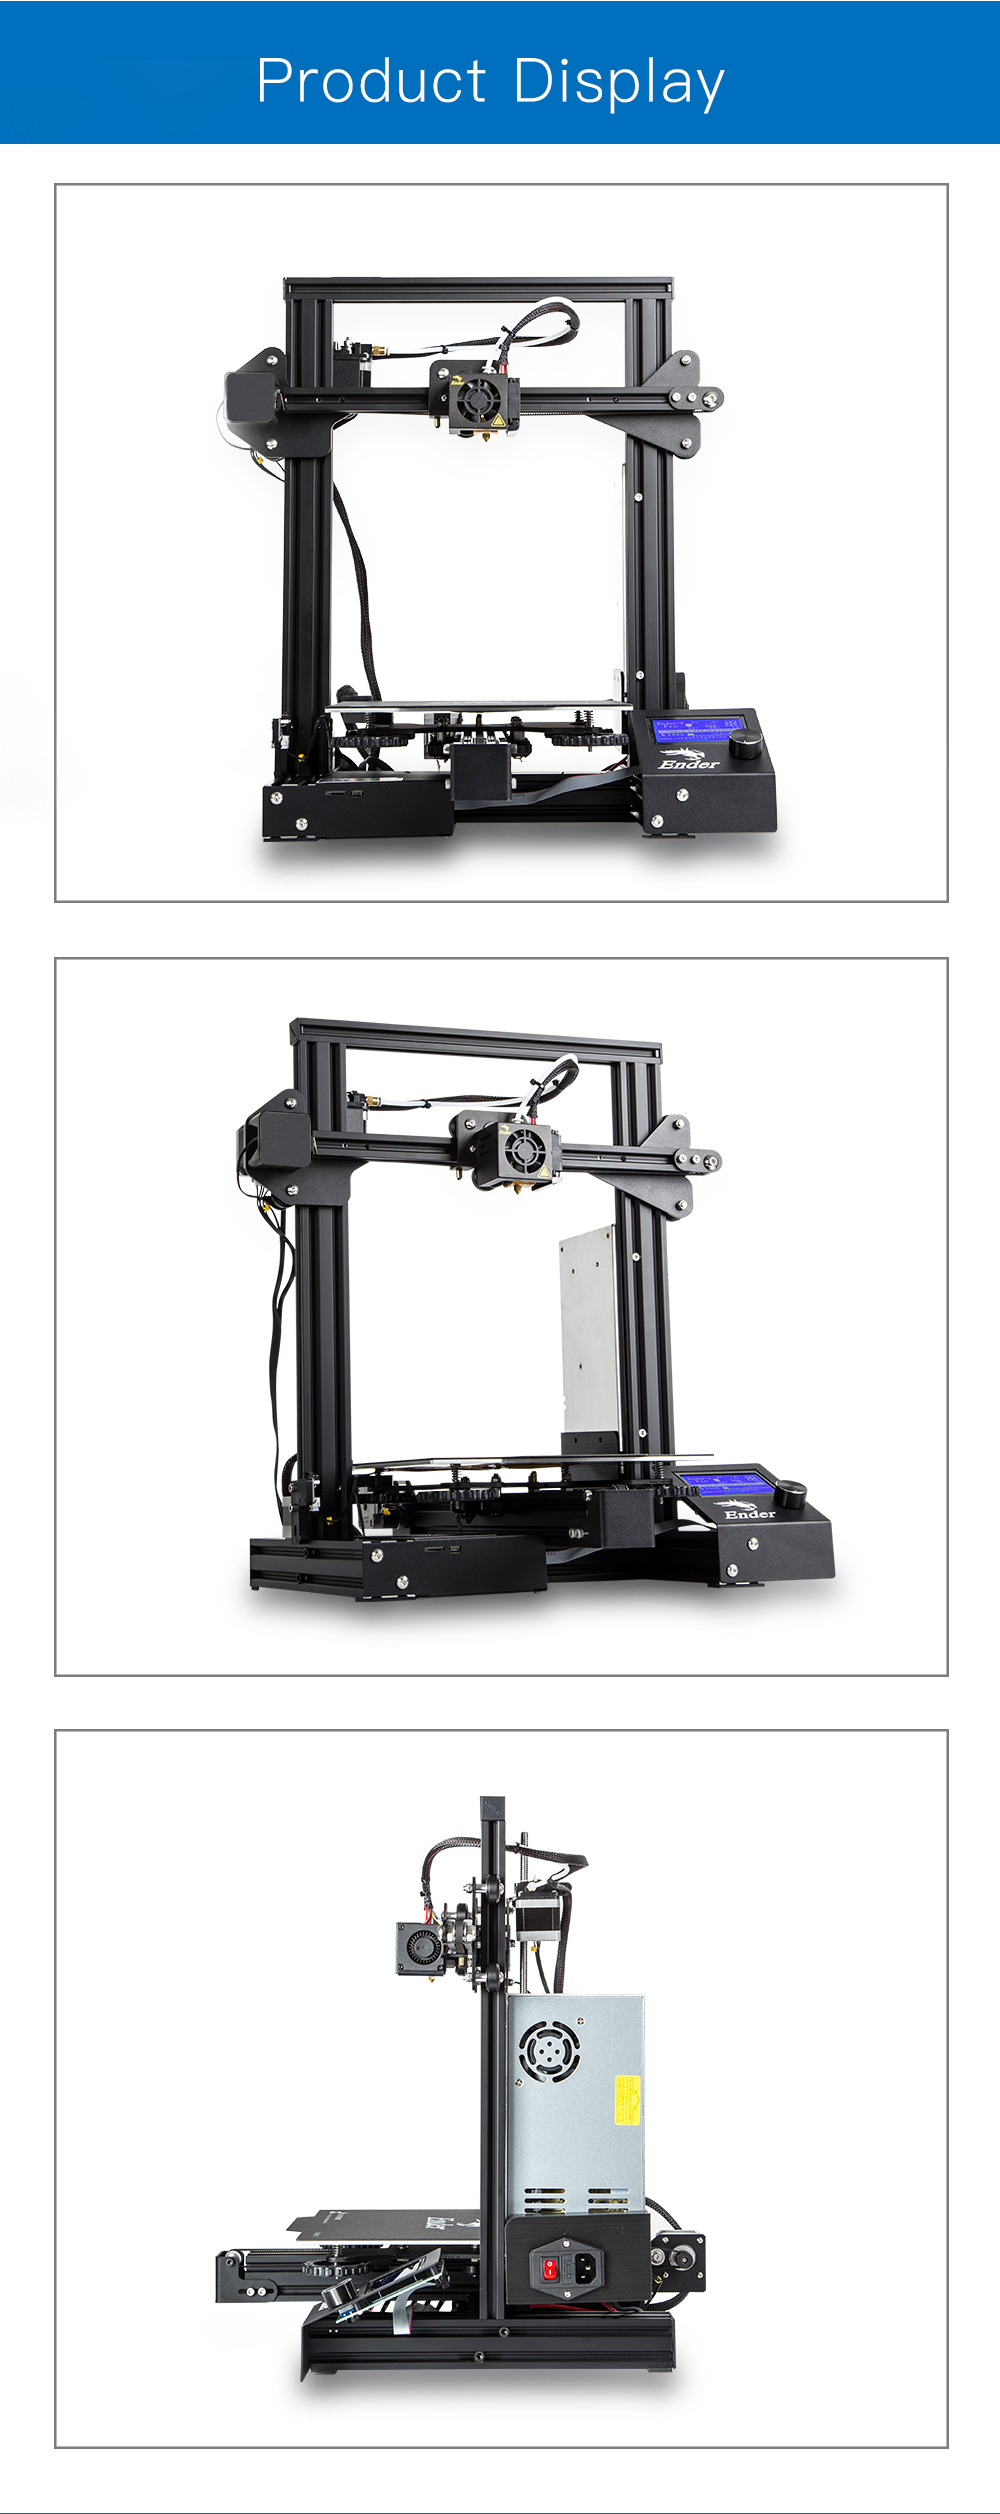 Creality 3D® Ender-3 Pro V-slot Prusa I3 DIY 3D Printer 220x220x250mm Printing Size With Magnetic Removable Platform Sticker/Power Resume Function/Off-line Print/Patent MK10 Extruder/Simple Leveling 14